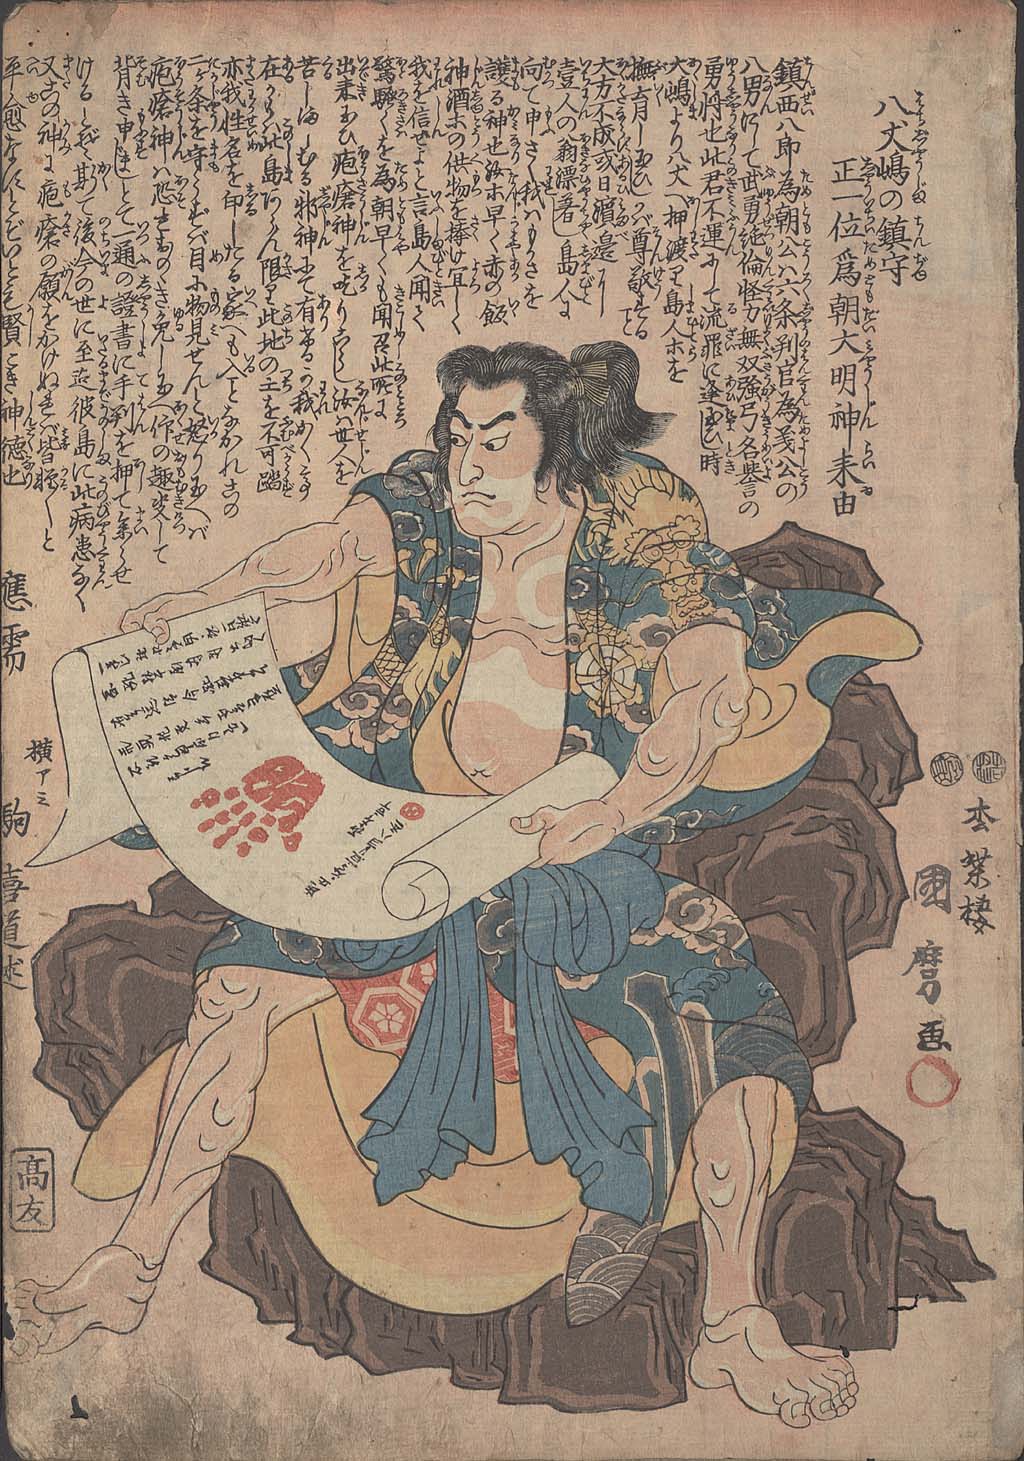 Hachijō-jima no chinju, shō ichii Tametomo Daimyōjin raiyu Legend of Tametomo, great bright god, guardian of Hachijō island Creator/Contributor: Utagawa, Kunimaro I, fl. 1845-1875, Artist Date: 1860s